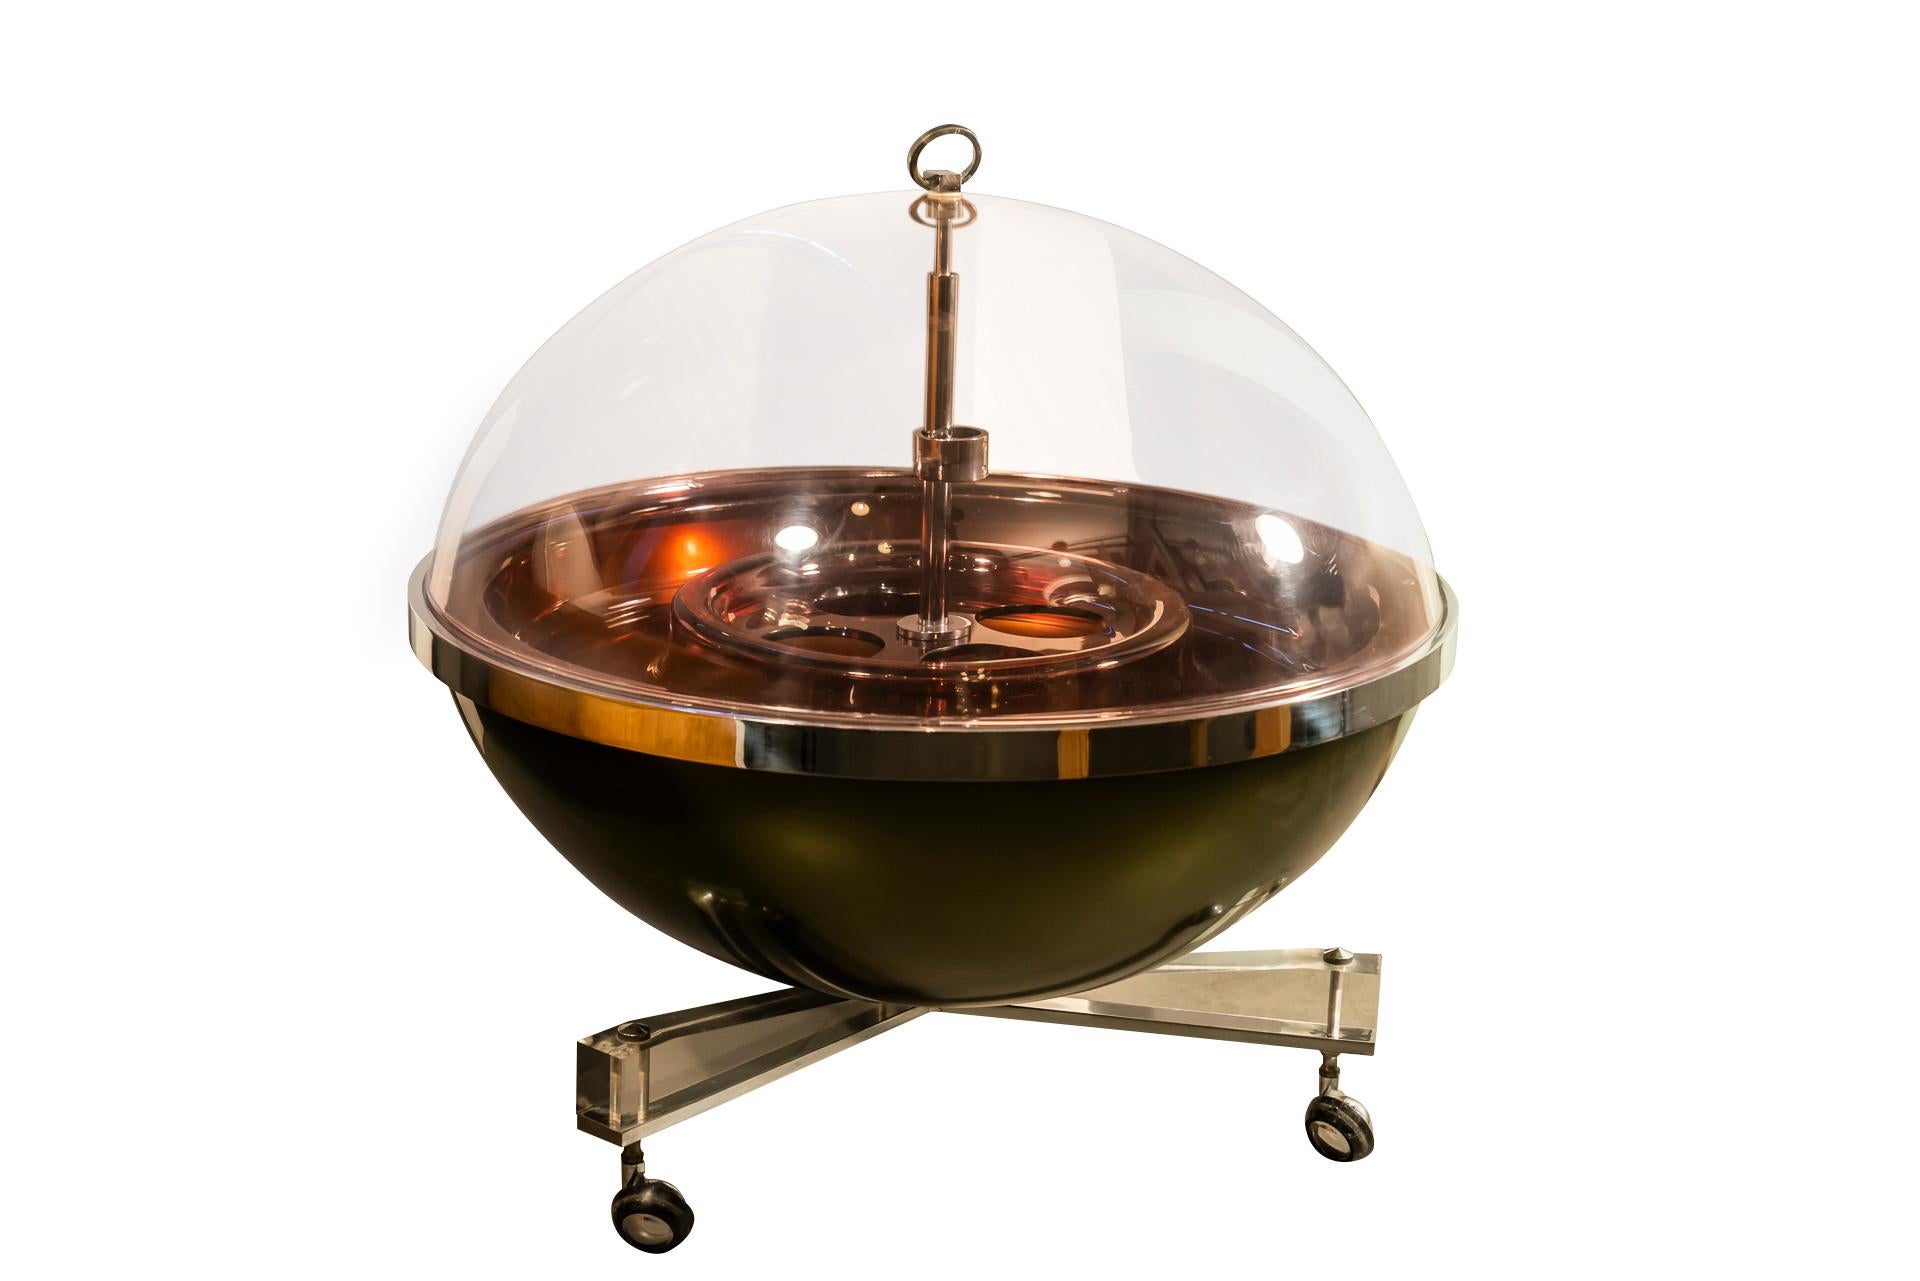 Pierre Cardin (1922-2020), 
Spherical low cocktail, 
Chromed metal, Perspex, rubber castors feet,
Lift-up top,
France, circa 1970.

Measures: Height 65 cm, diameter 110 cm.